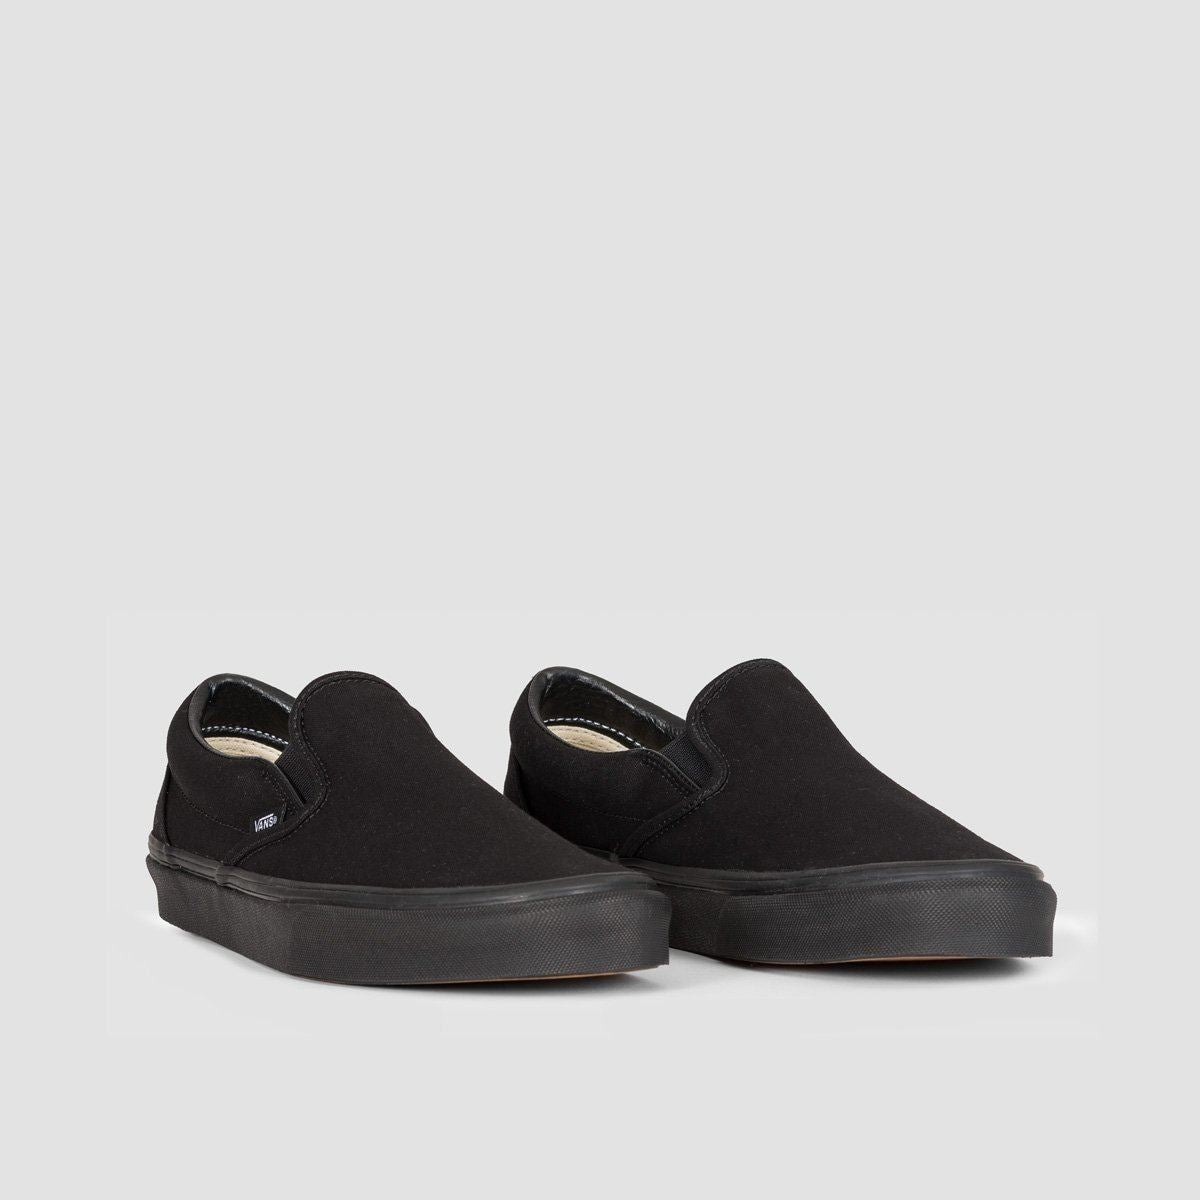 Vans Classic Slip-On Shoes - Black/Black